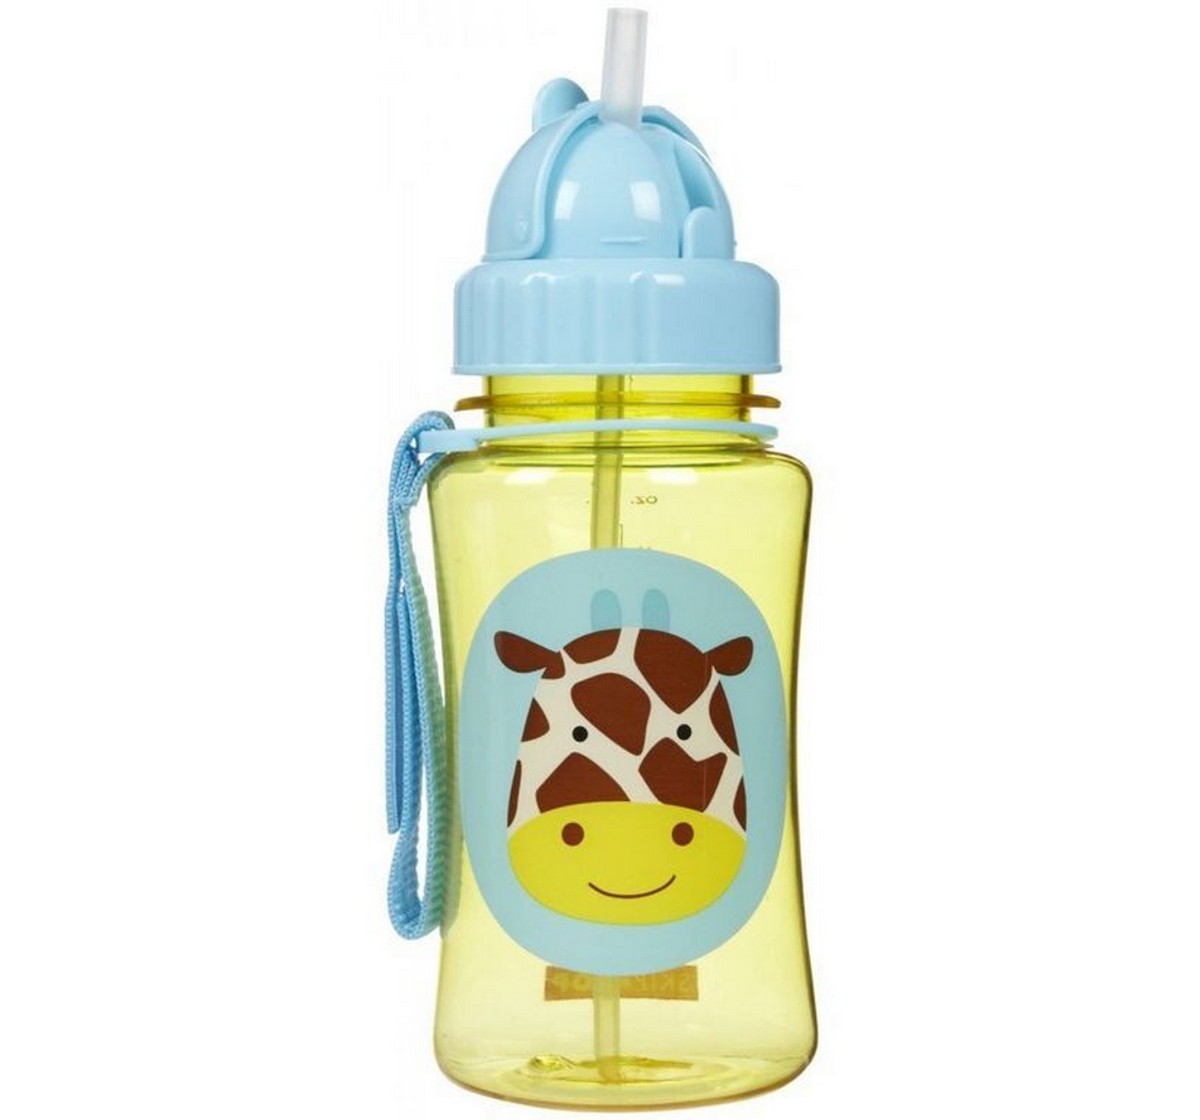 Skip Hop Zoo Straw Bottle Giraffe 18M+, Multicolour